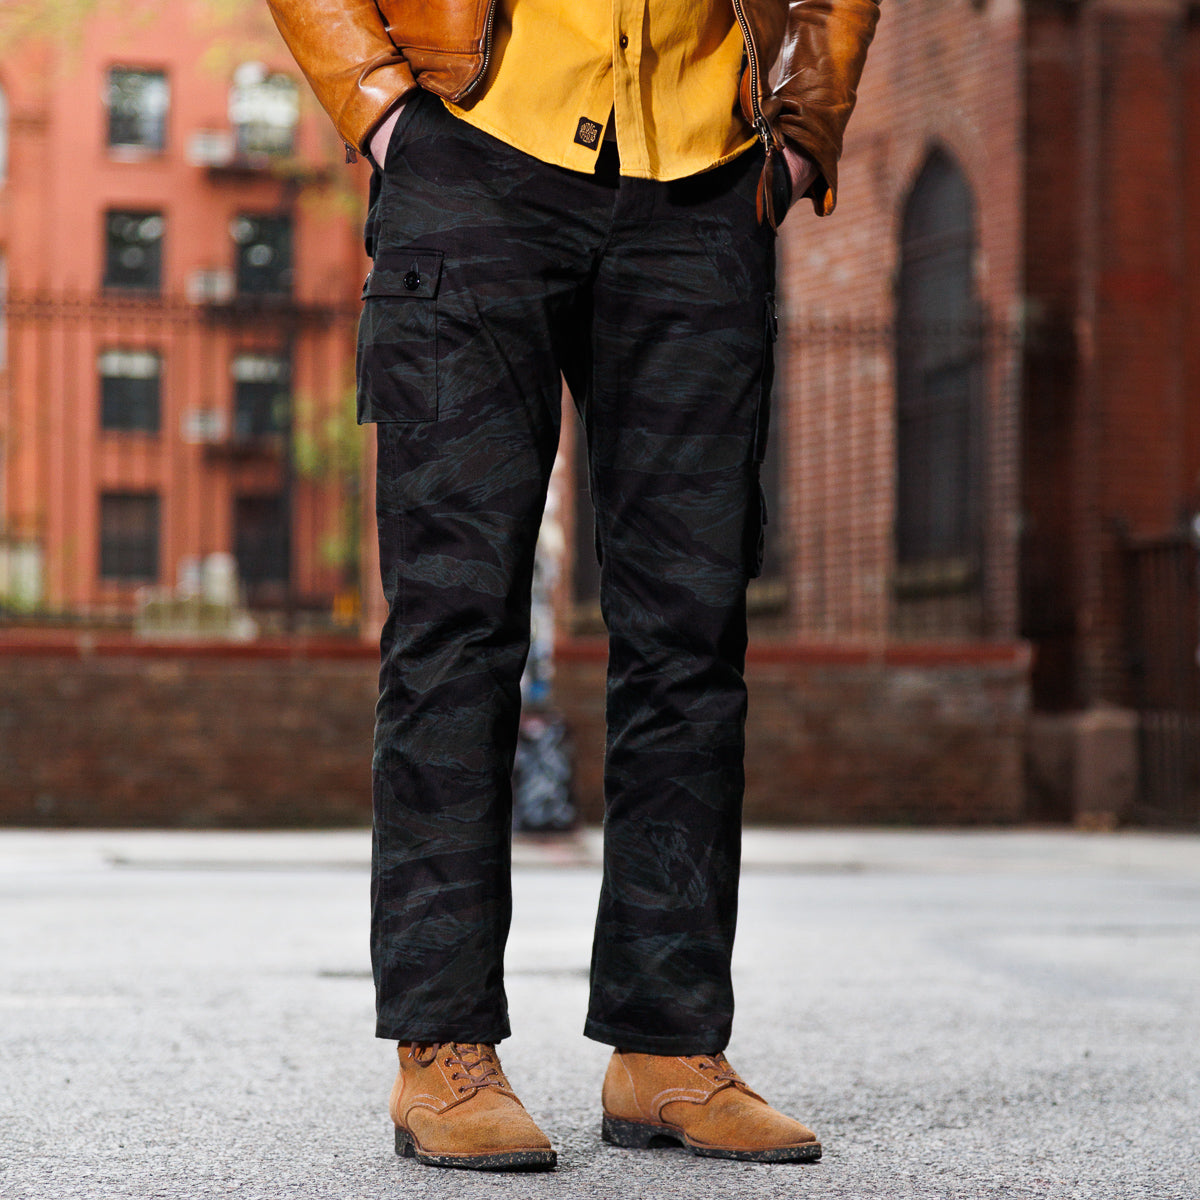 The McCoy's Tiger Trousers - Black Over-dye - Standard & Strange